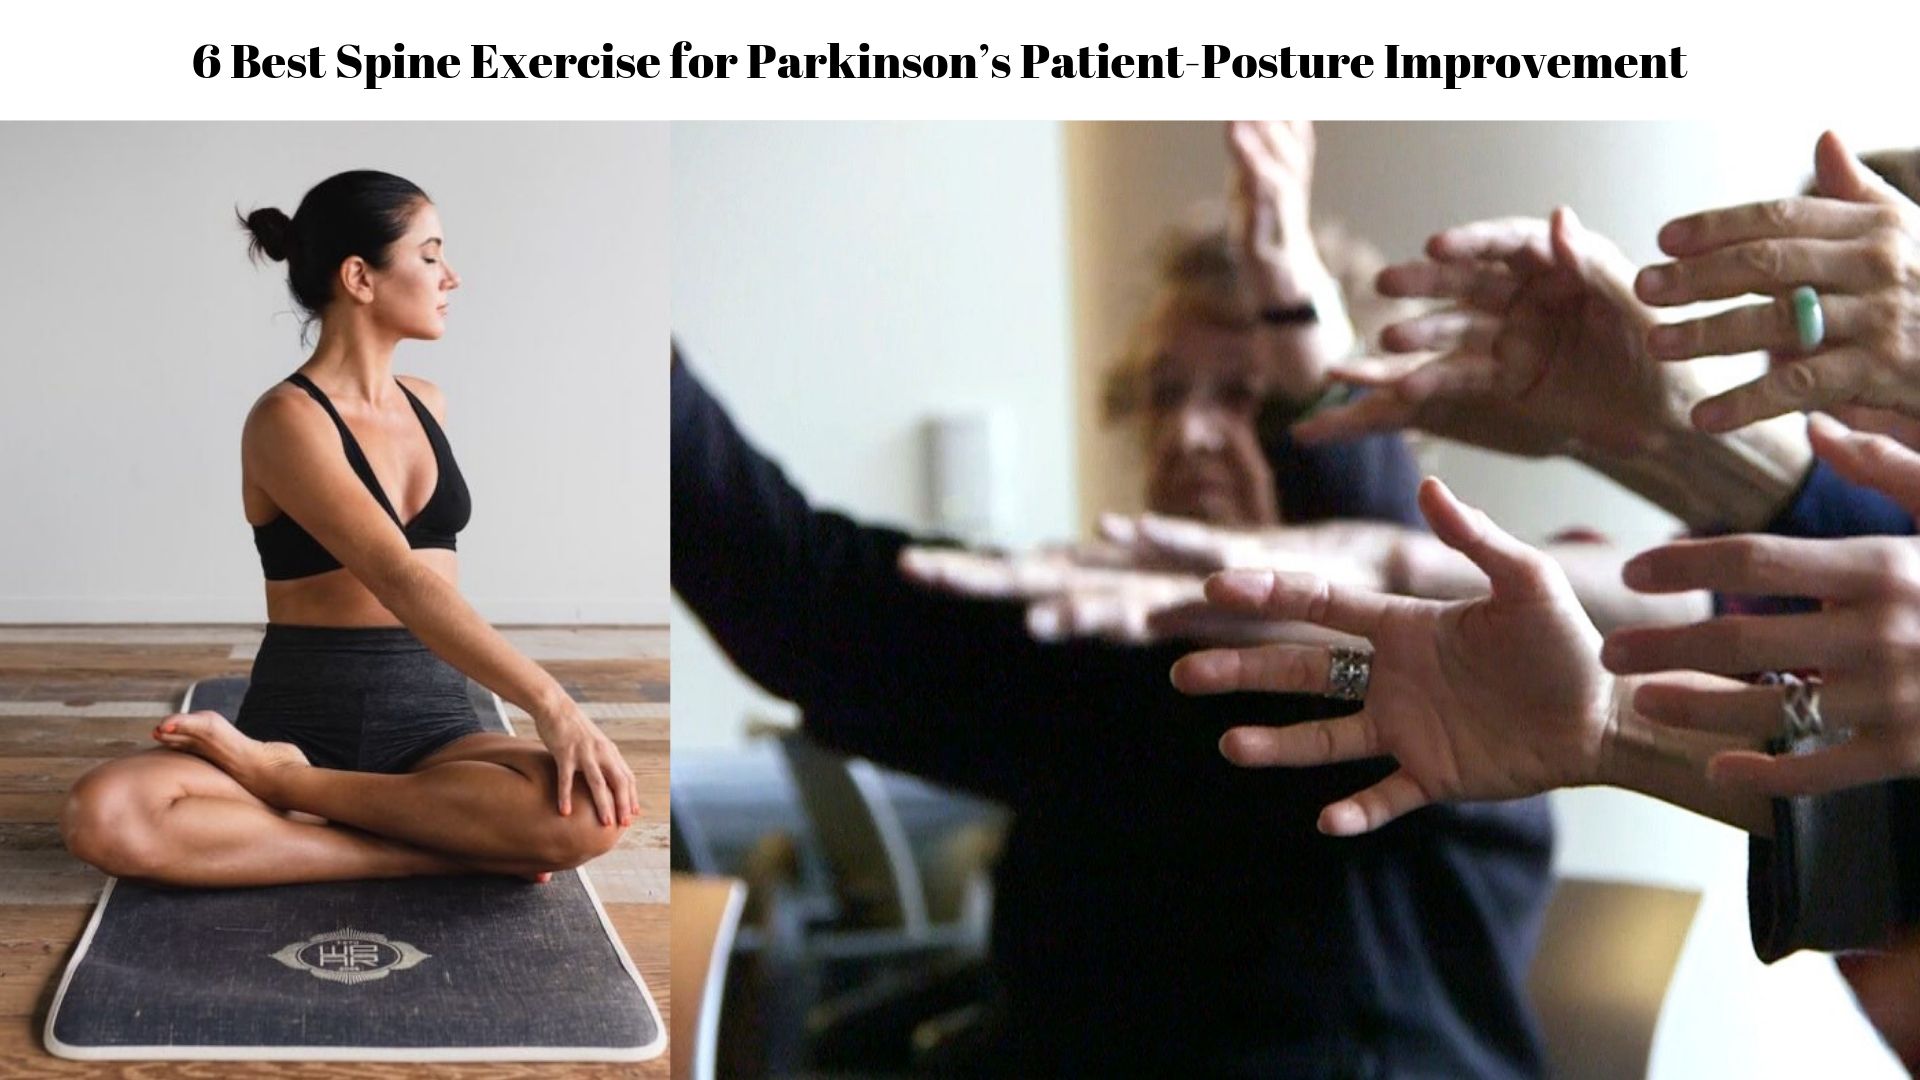 Parkinson's Disease Symptoms and Diagnosis